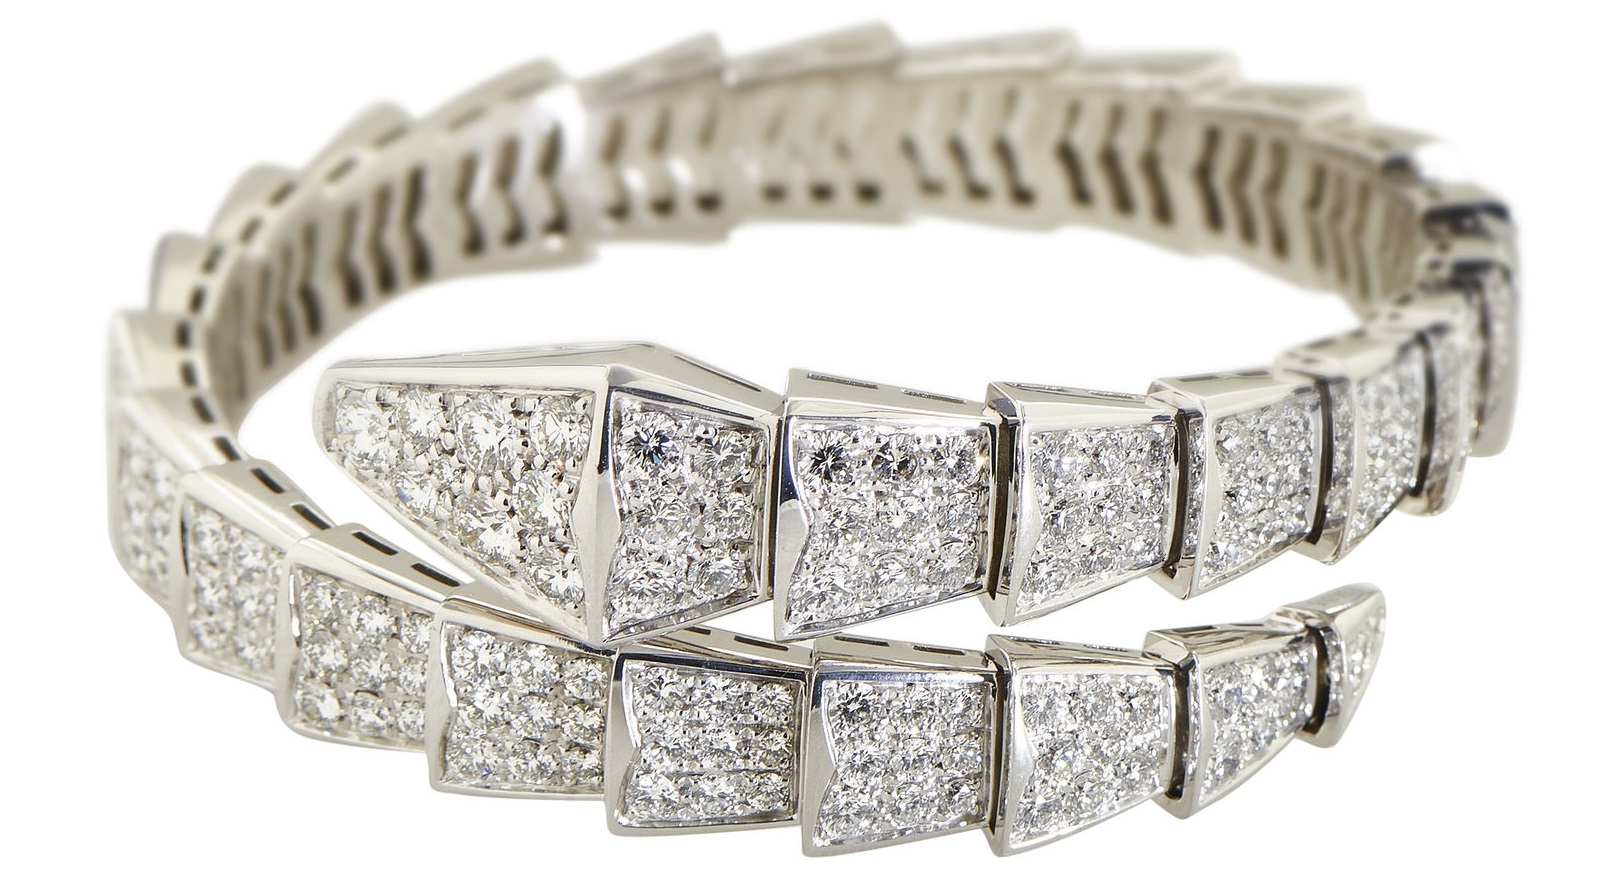 Bvlgari Serpenti 18K White Gold Full Diamond Pave Medium Bracelet